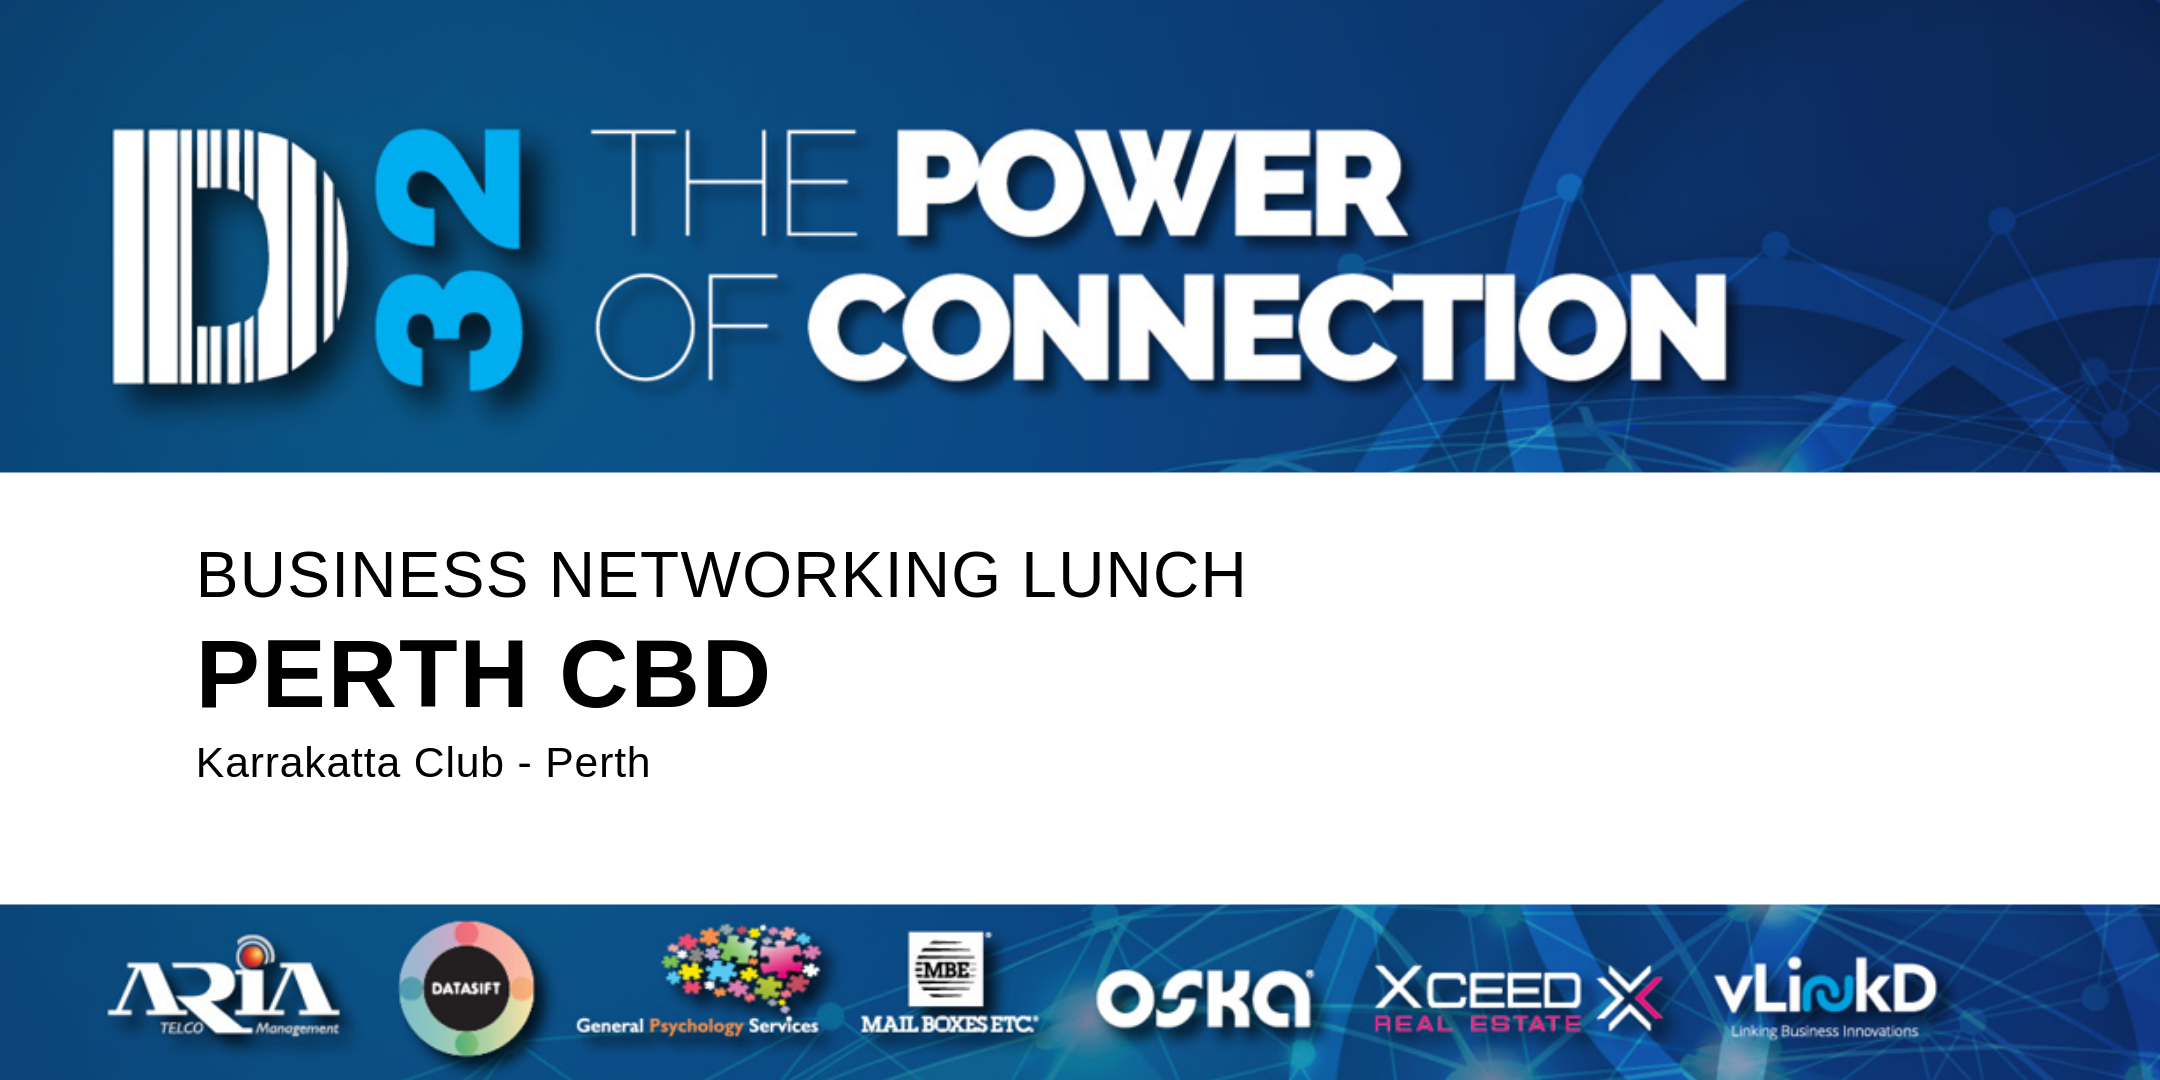 District32 Business Networking Perth – Perth CBD - Thu 11th June